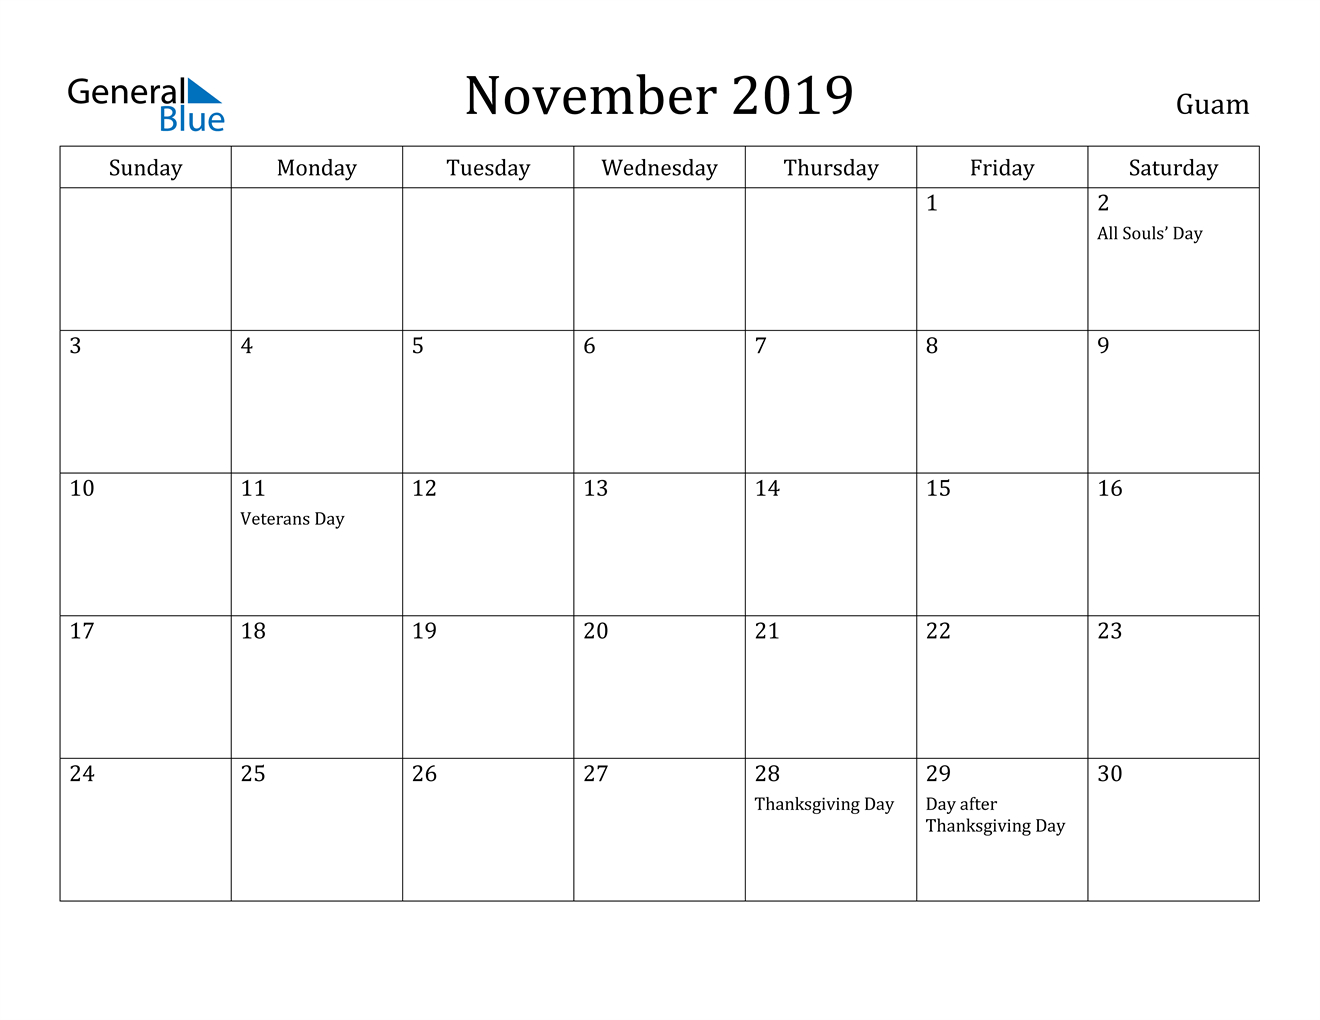 November 2019 Calendar - Guam